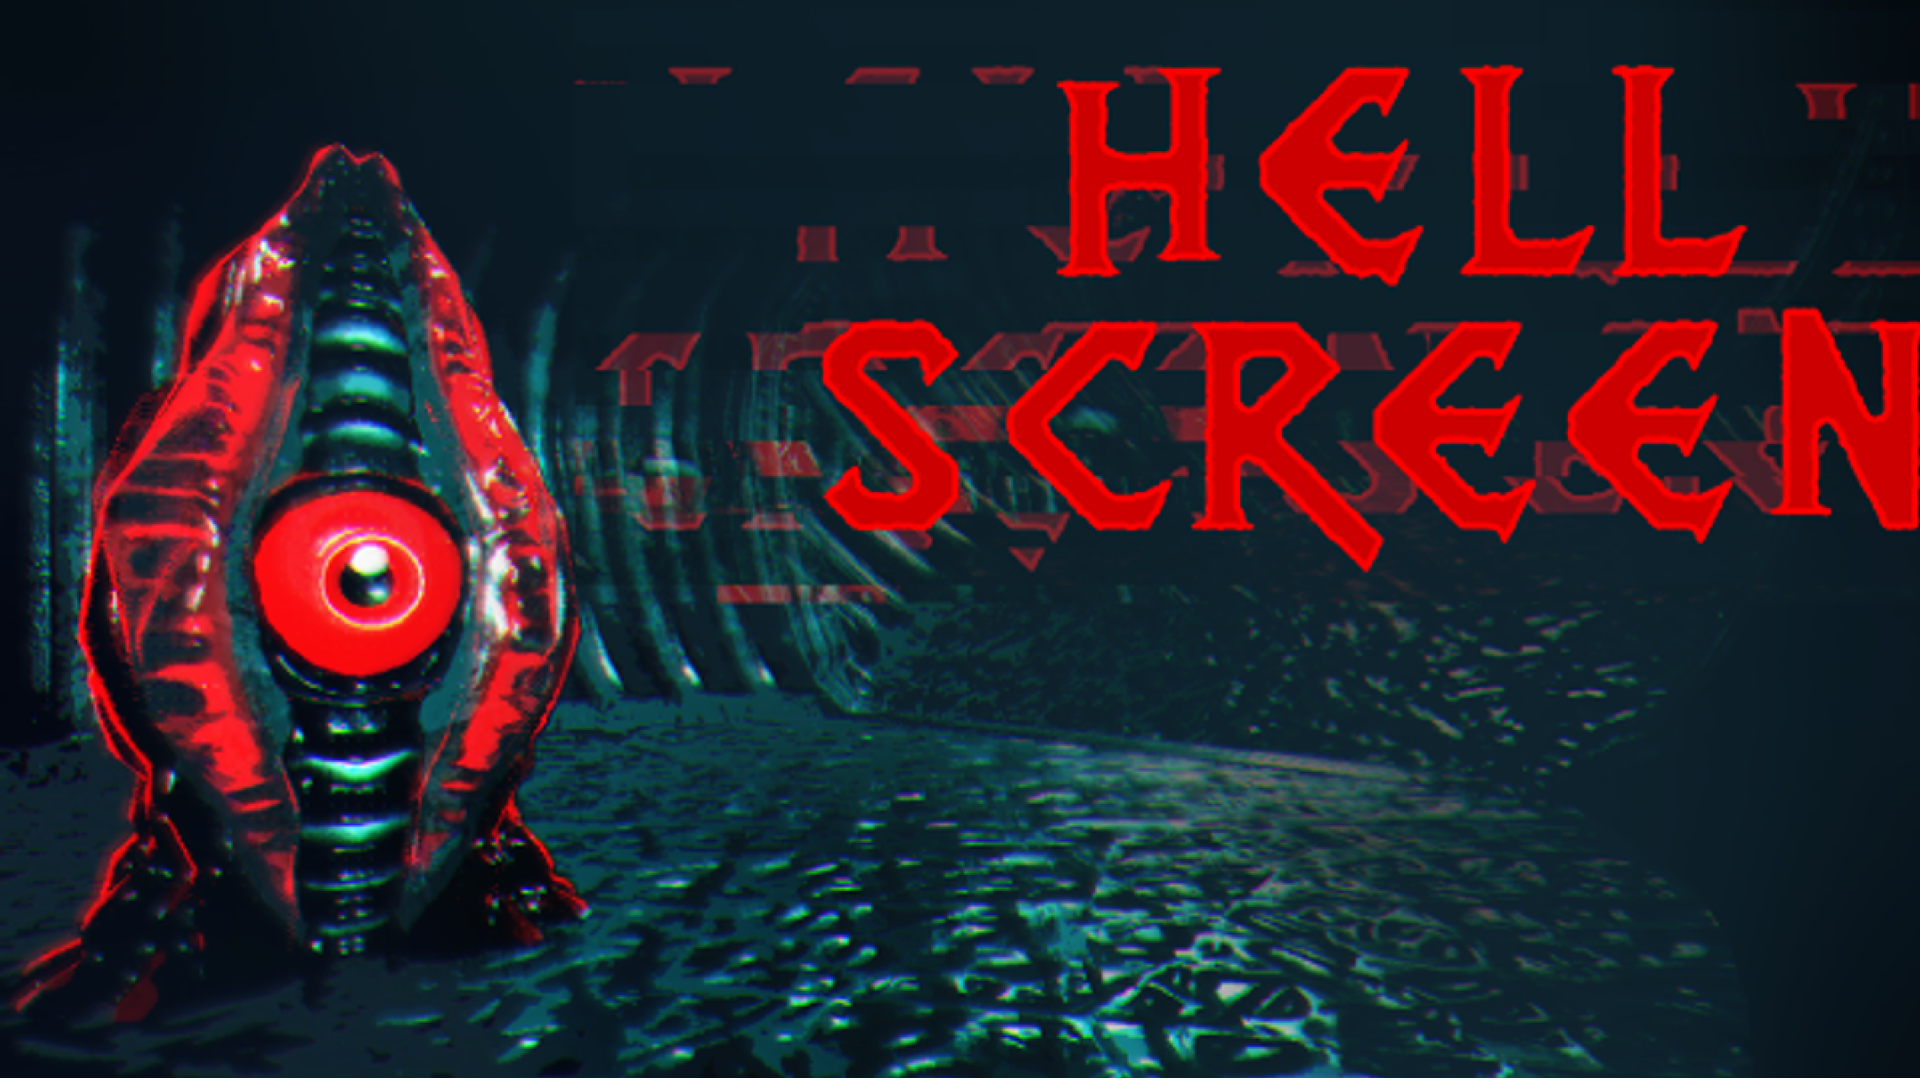 Key Art for Hellscreen